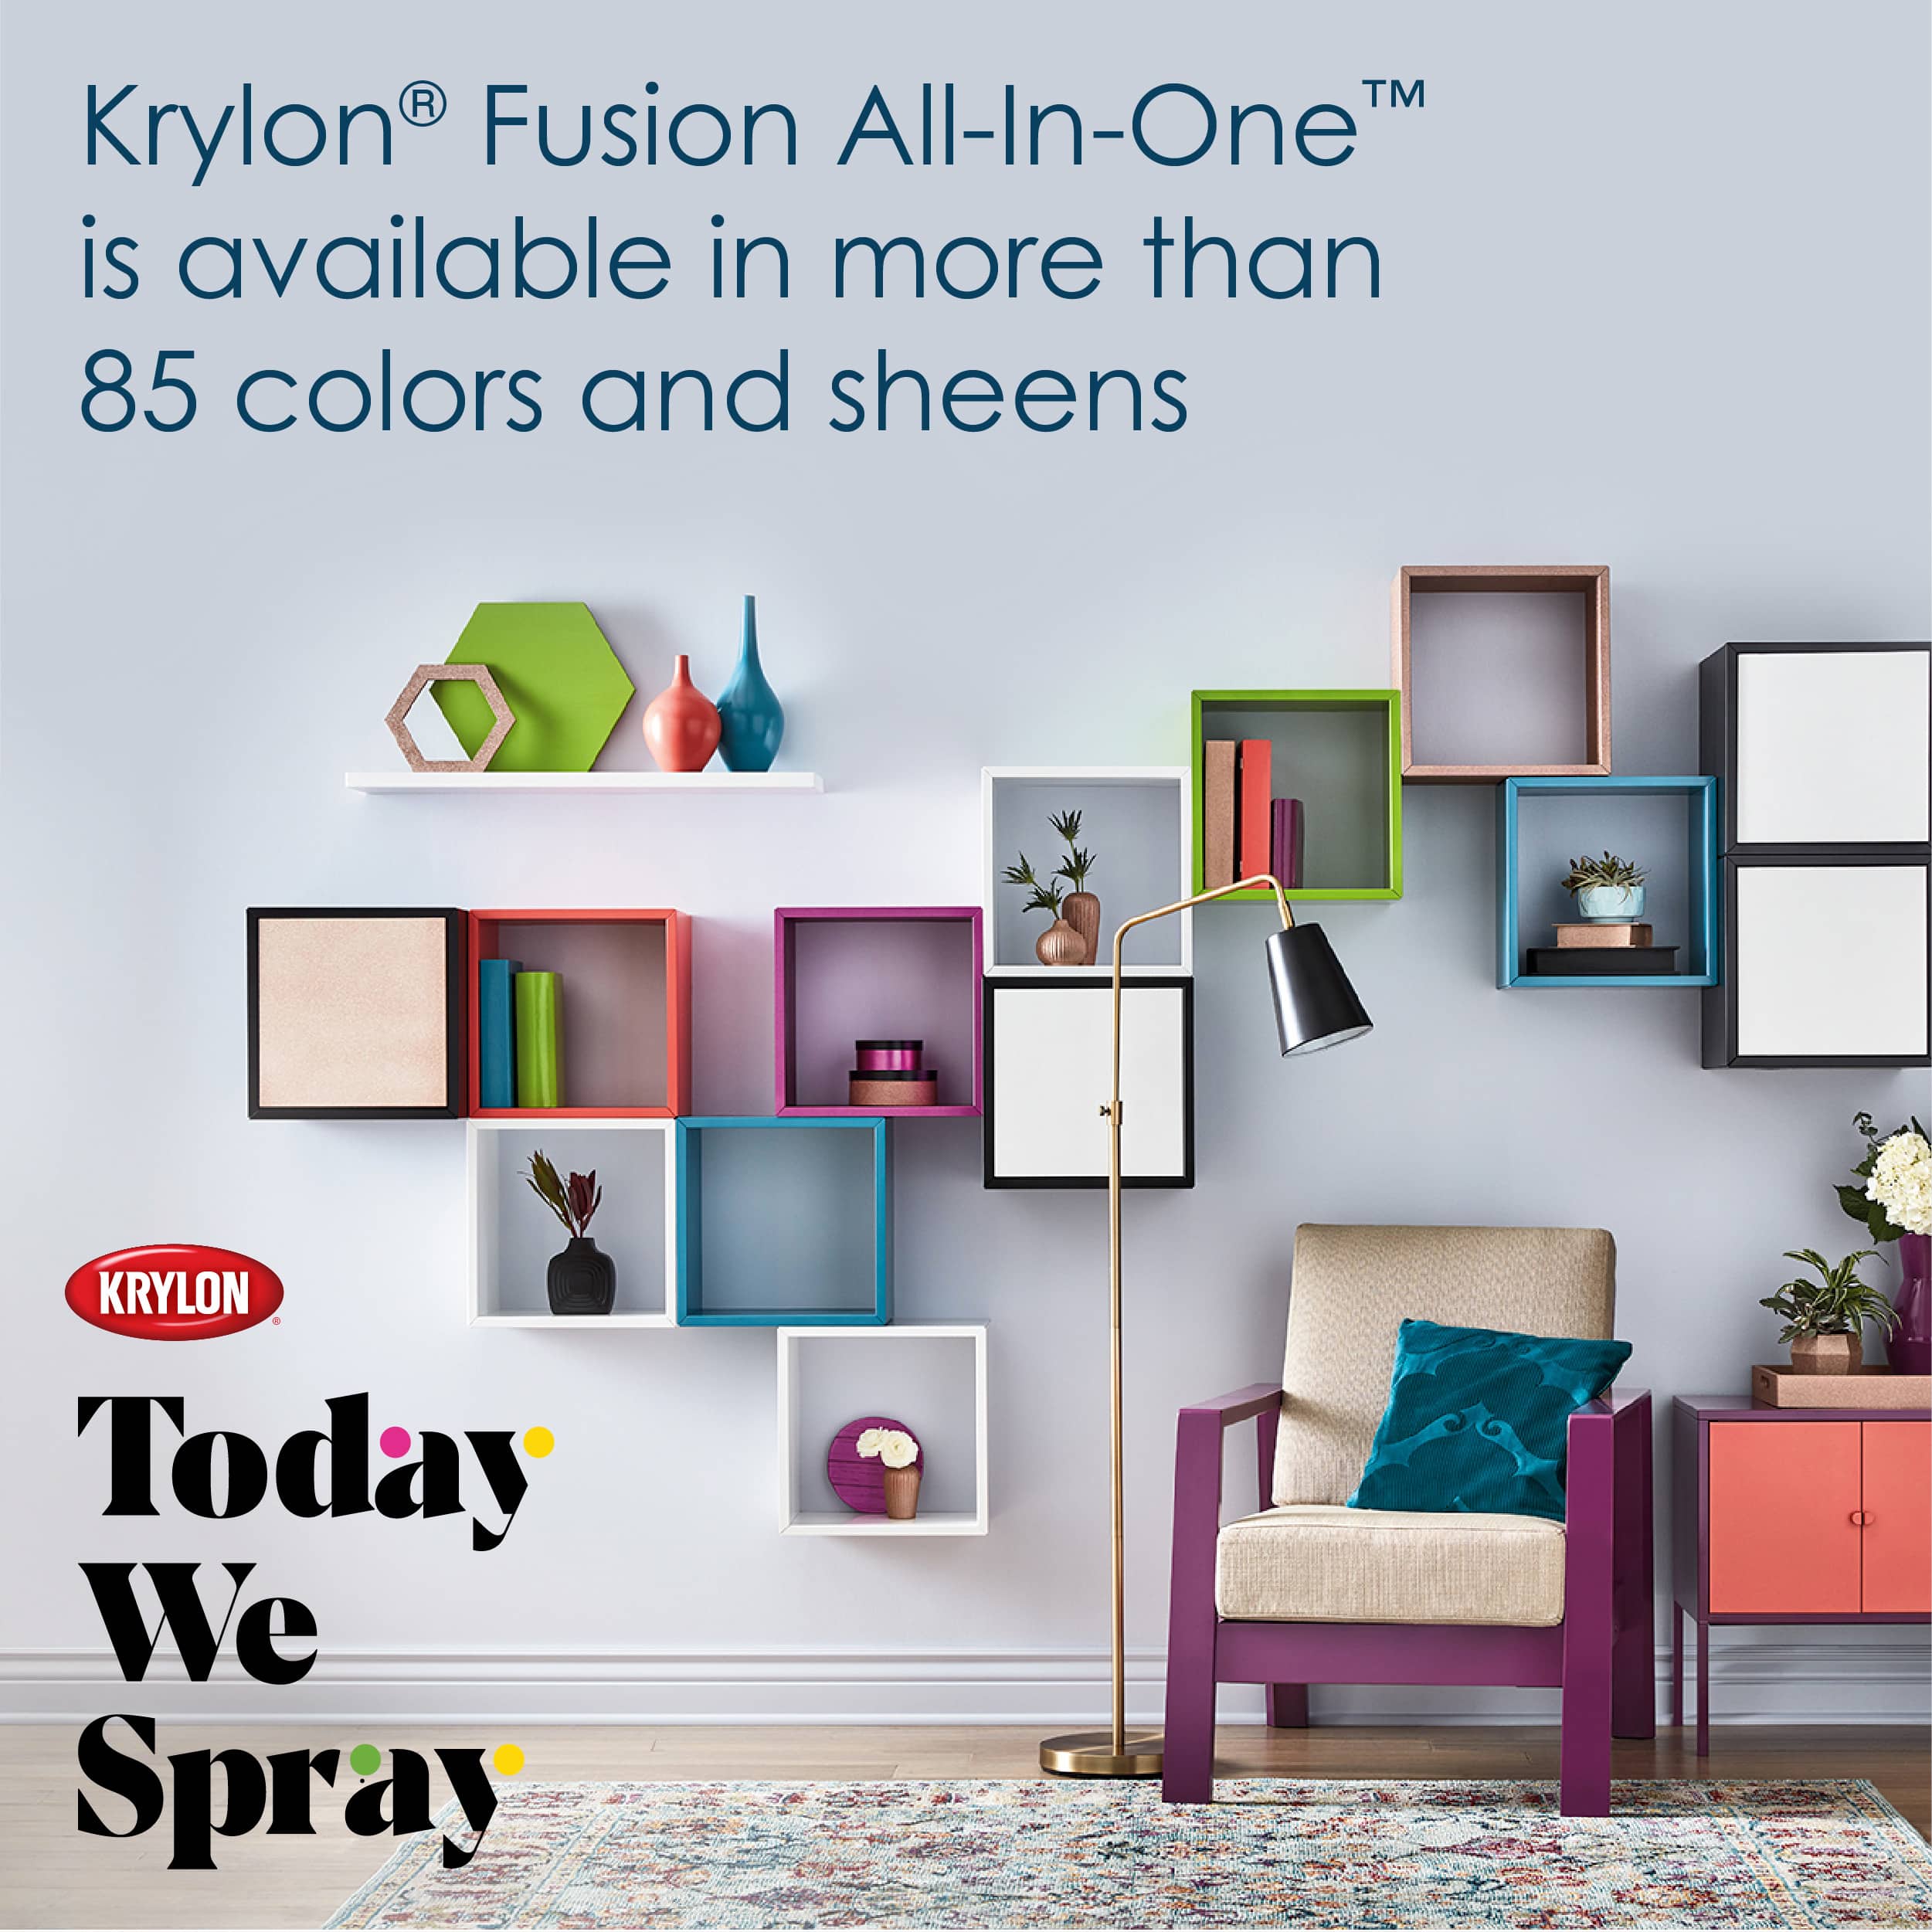 Krylon&#xAE; Fusion All-In-One&#x2122; Paint &#x26; Primer, Gloss Black